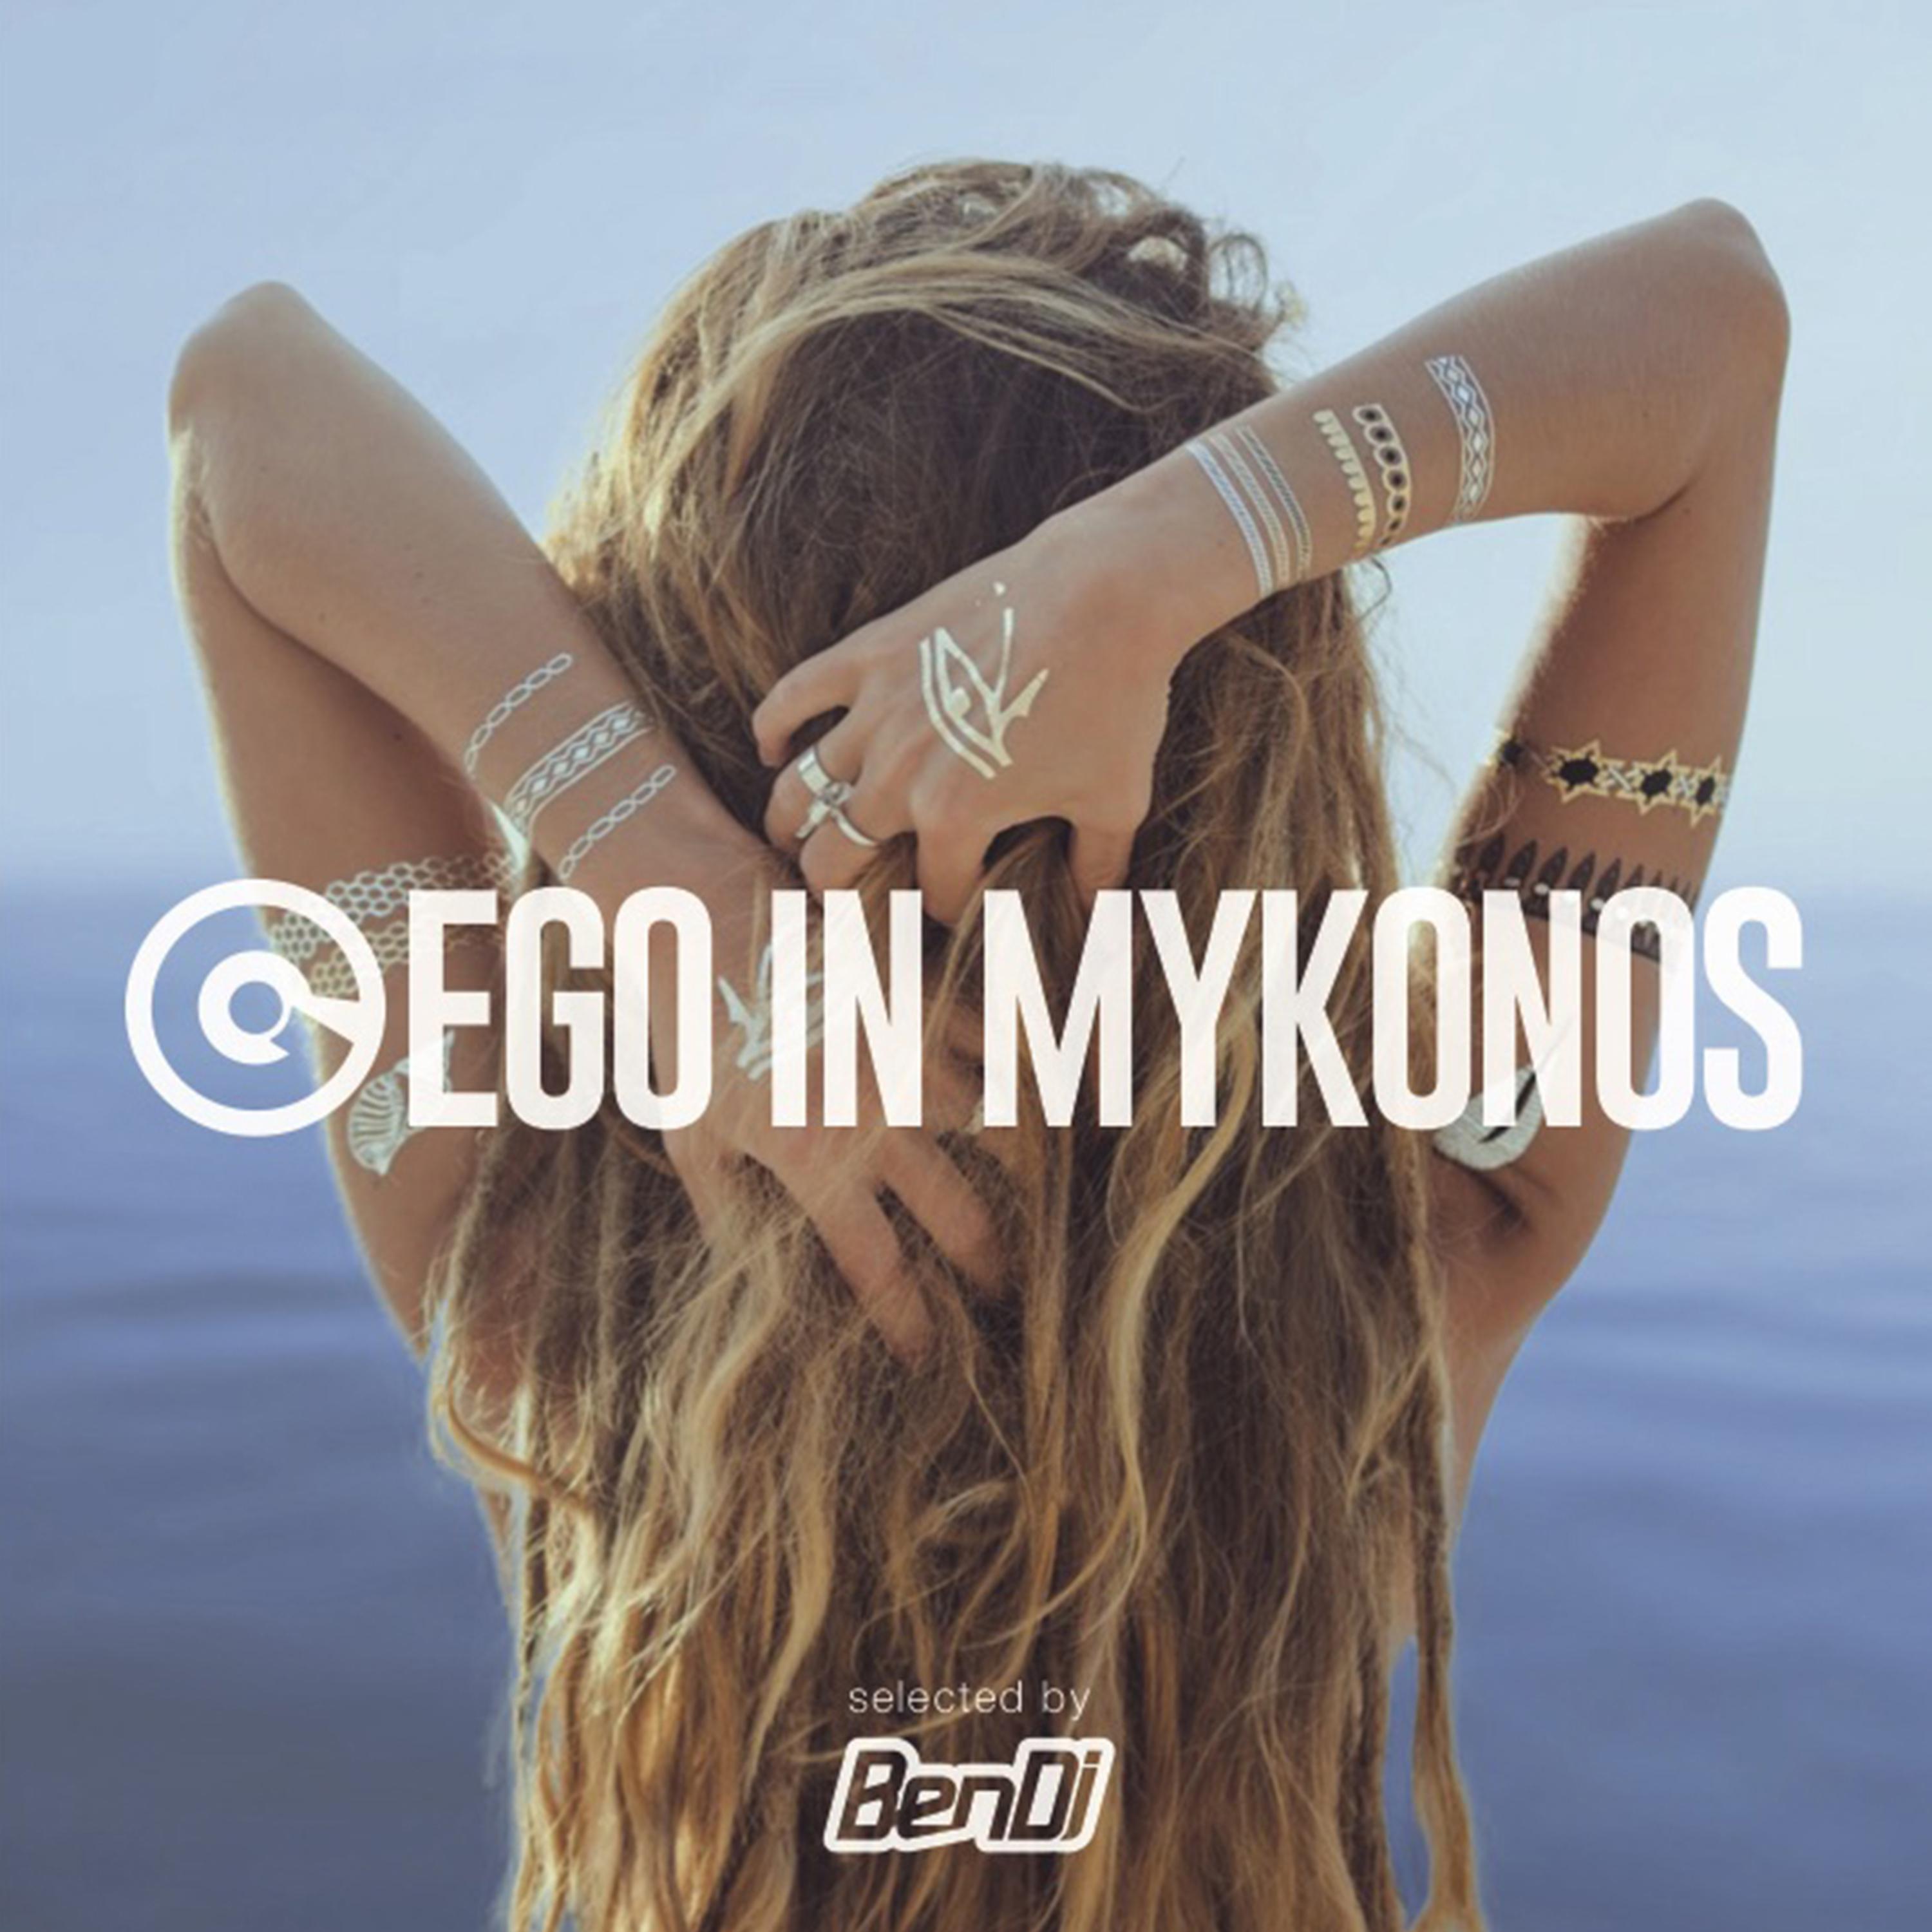 EGO IN MYKONOS 2017 SELECTED BY BEN DJ